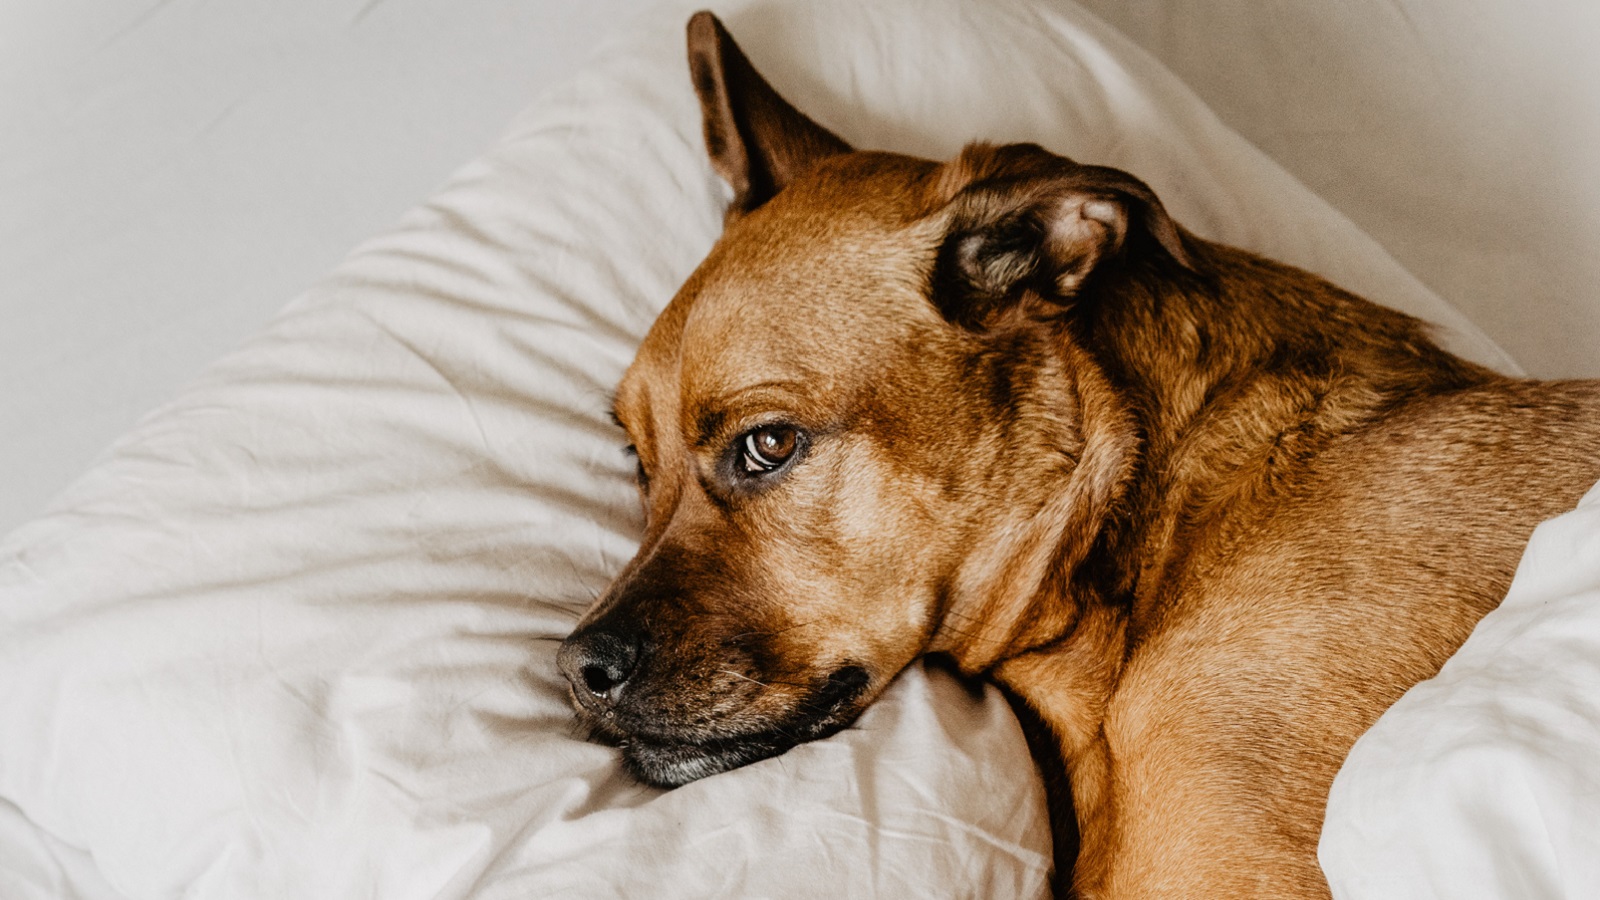 Sad dog lying in bed